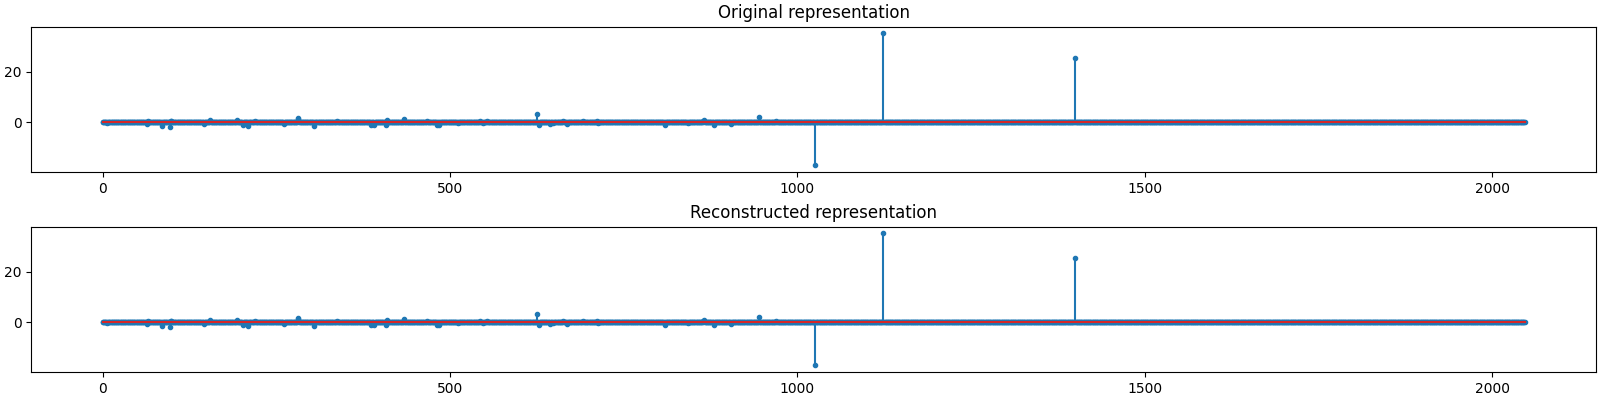 Original representation, Reconstructed representation